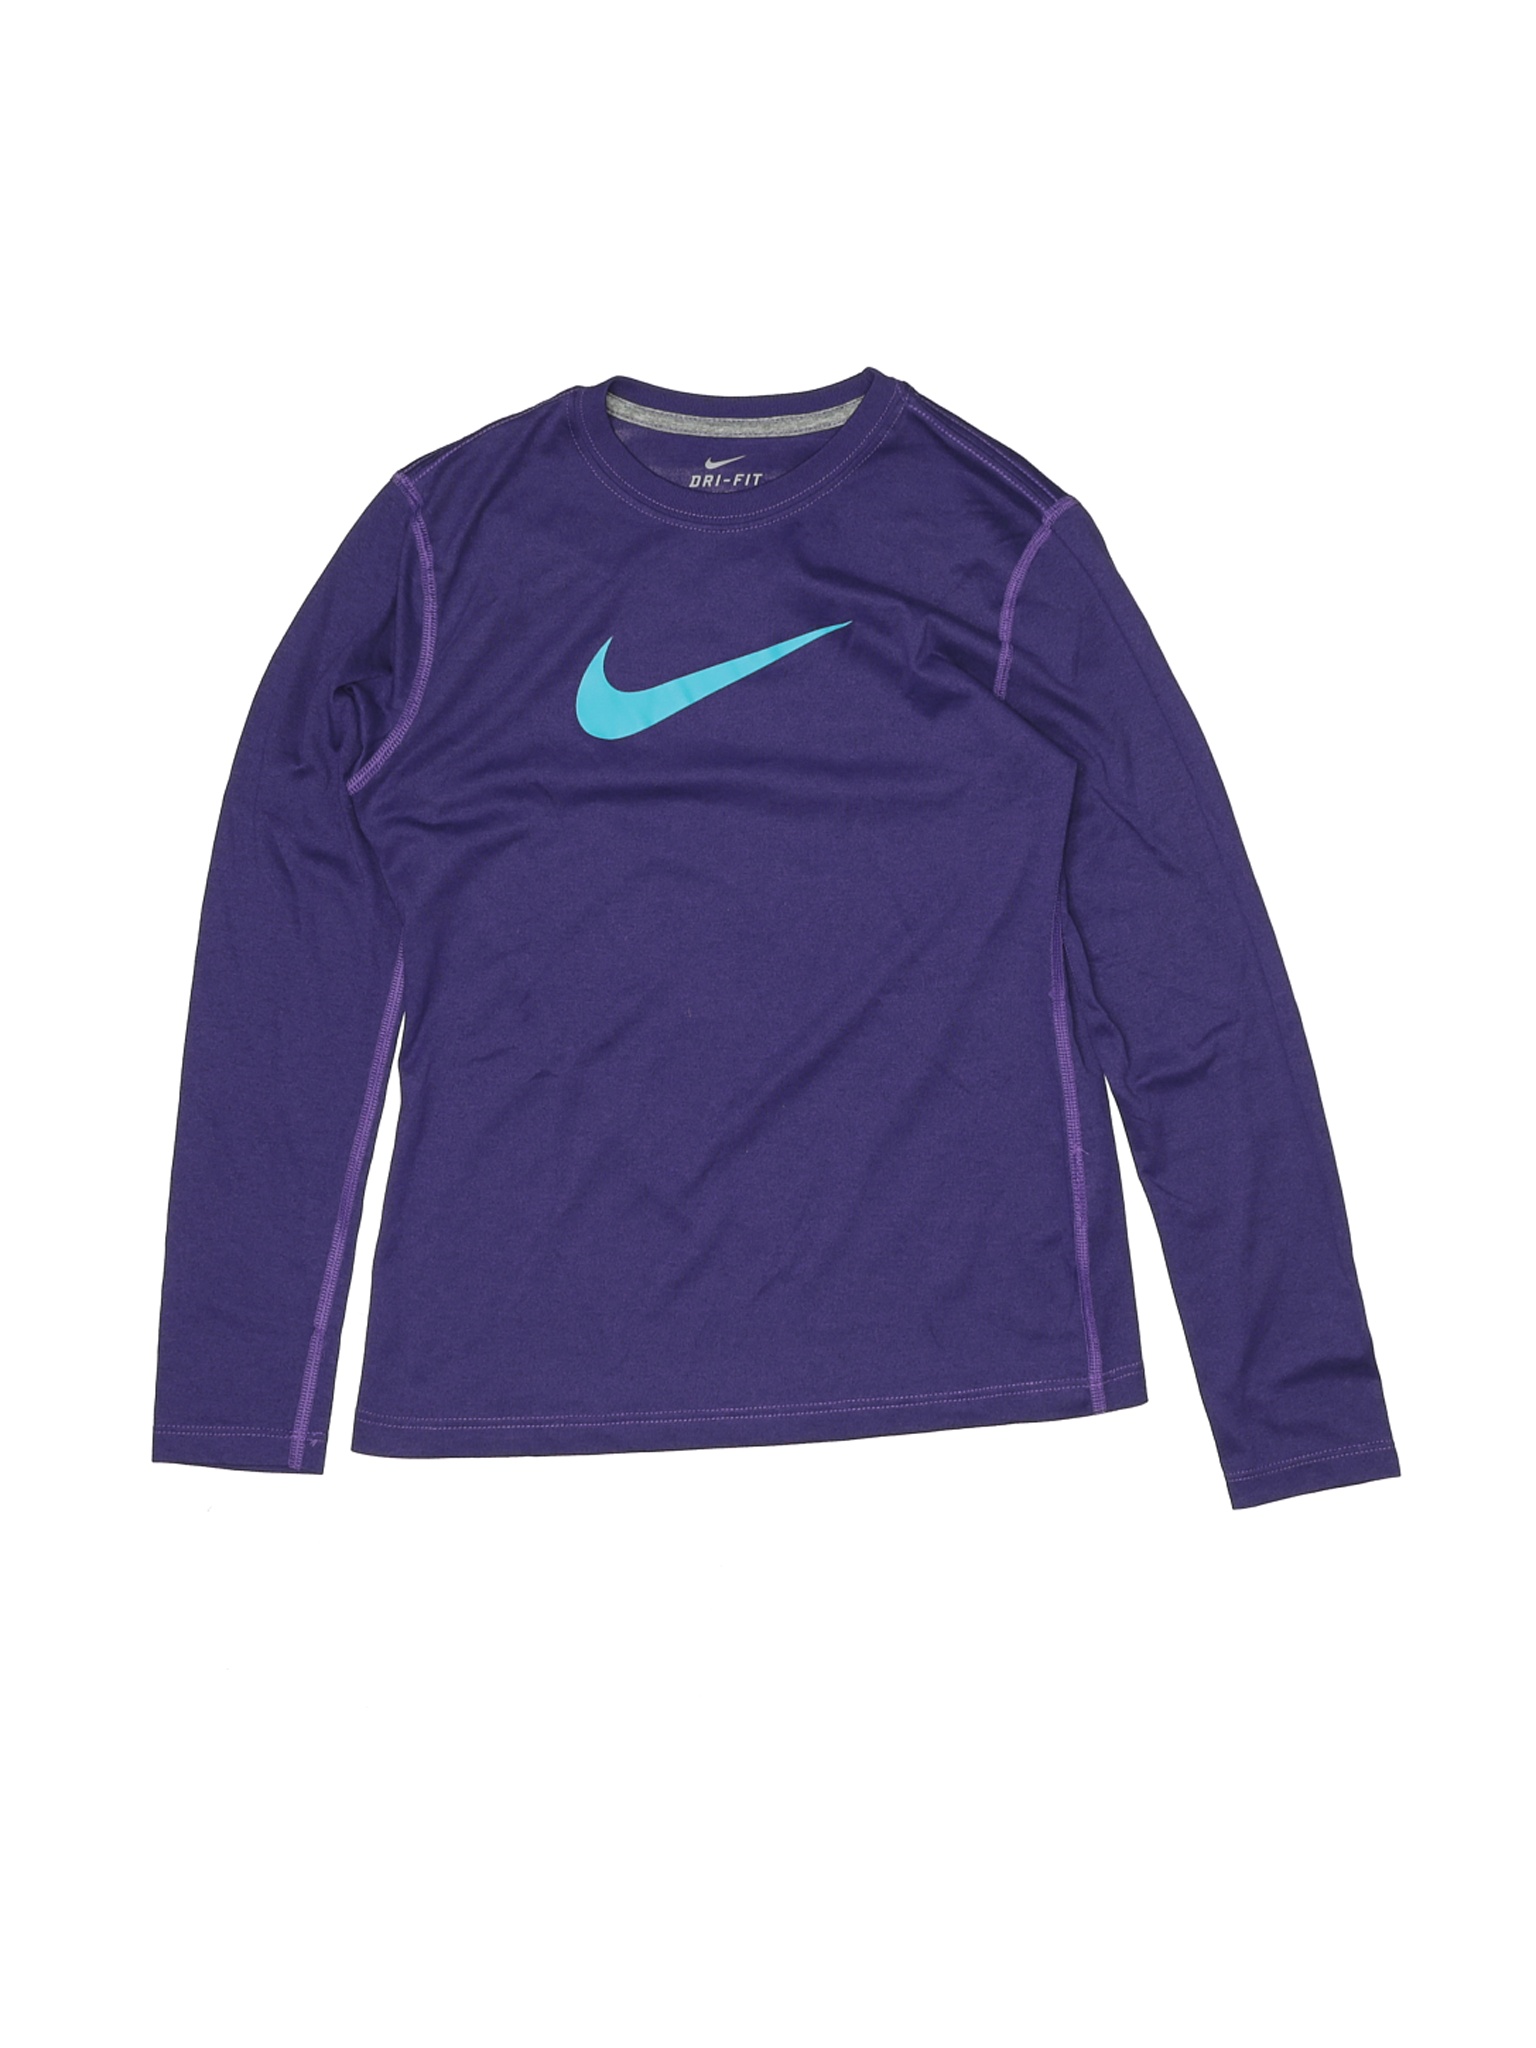 Nike Girls Purple Active T-Shirt M Youth | eBay